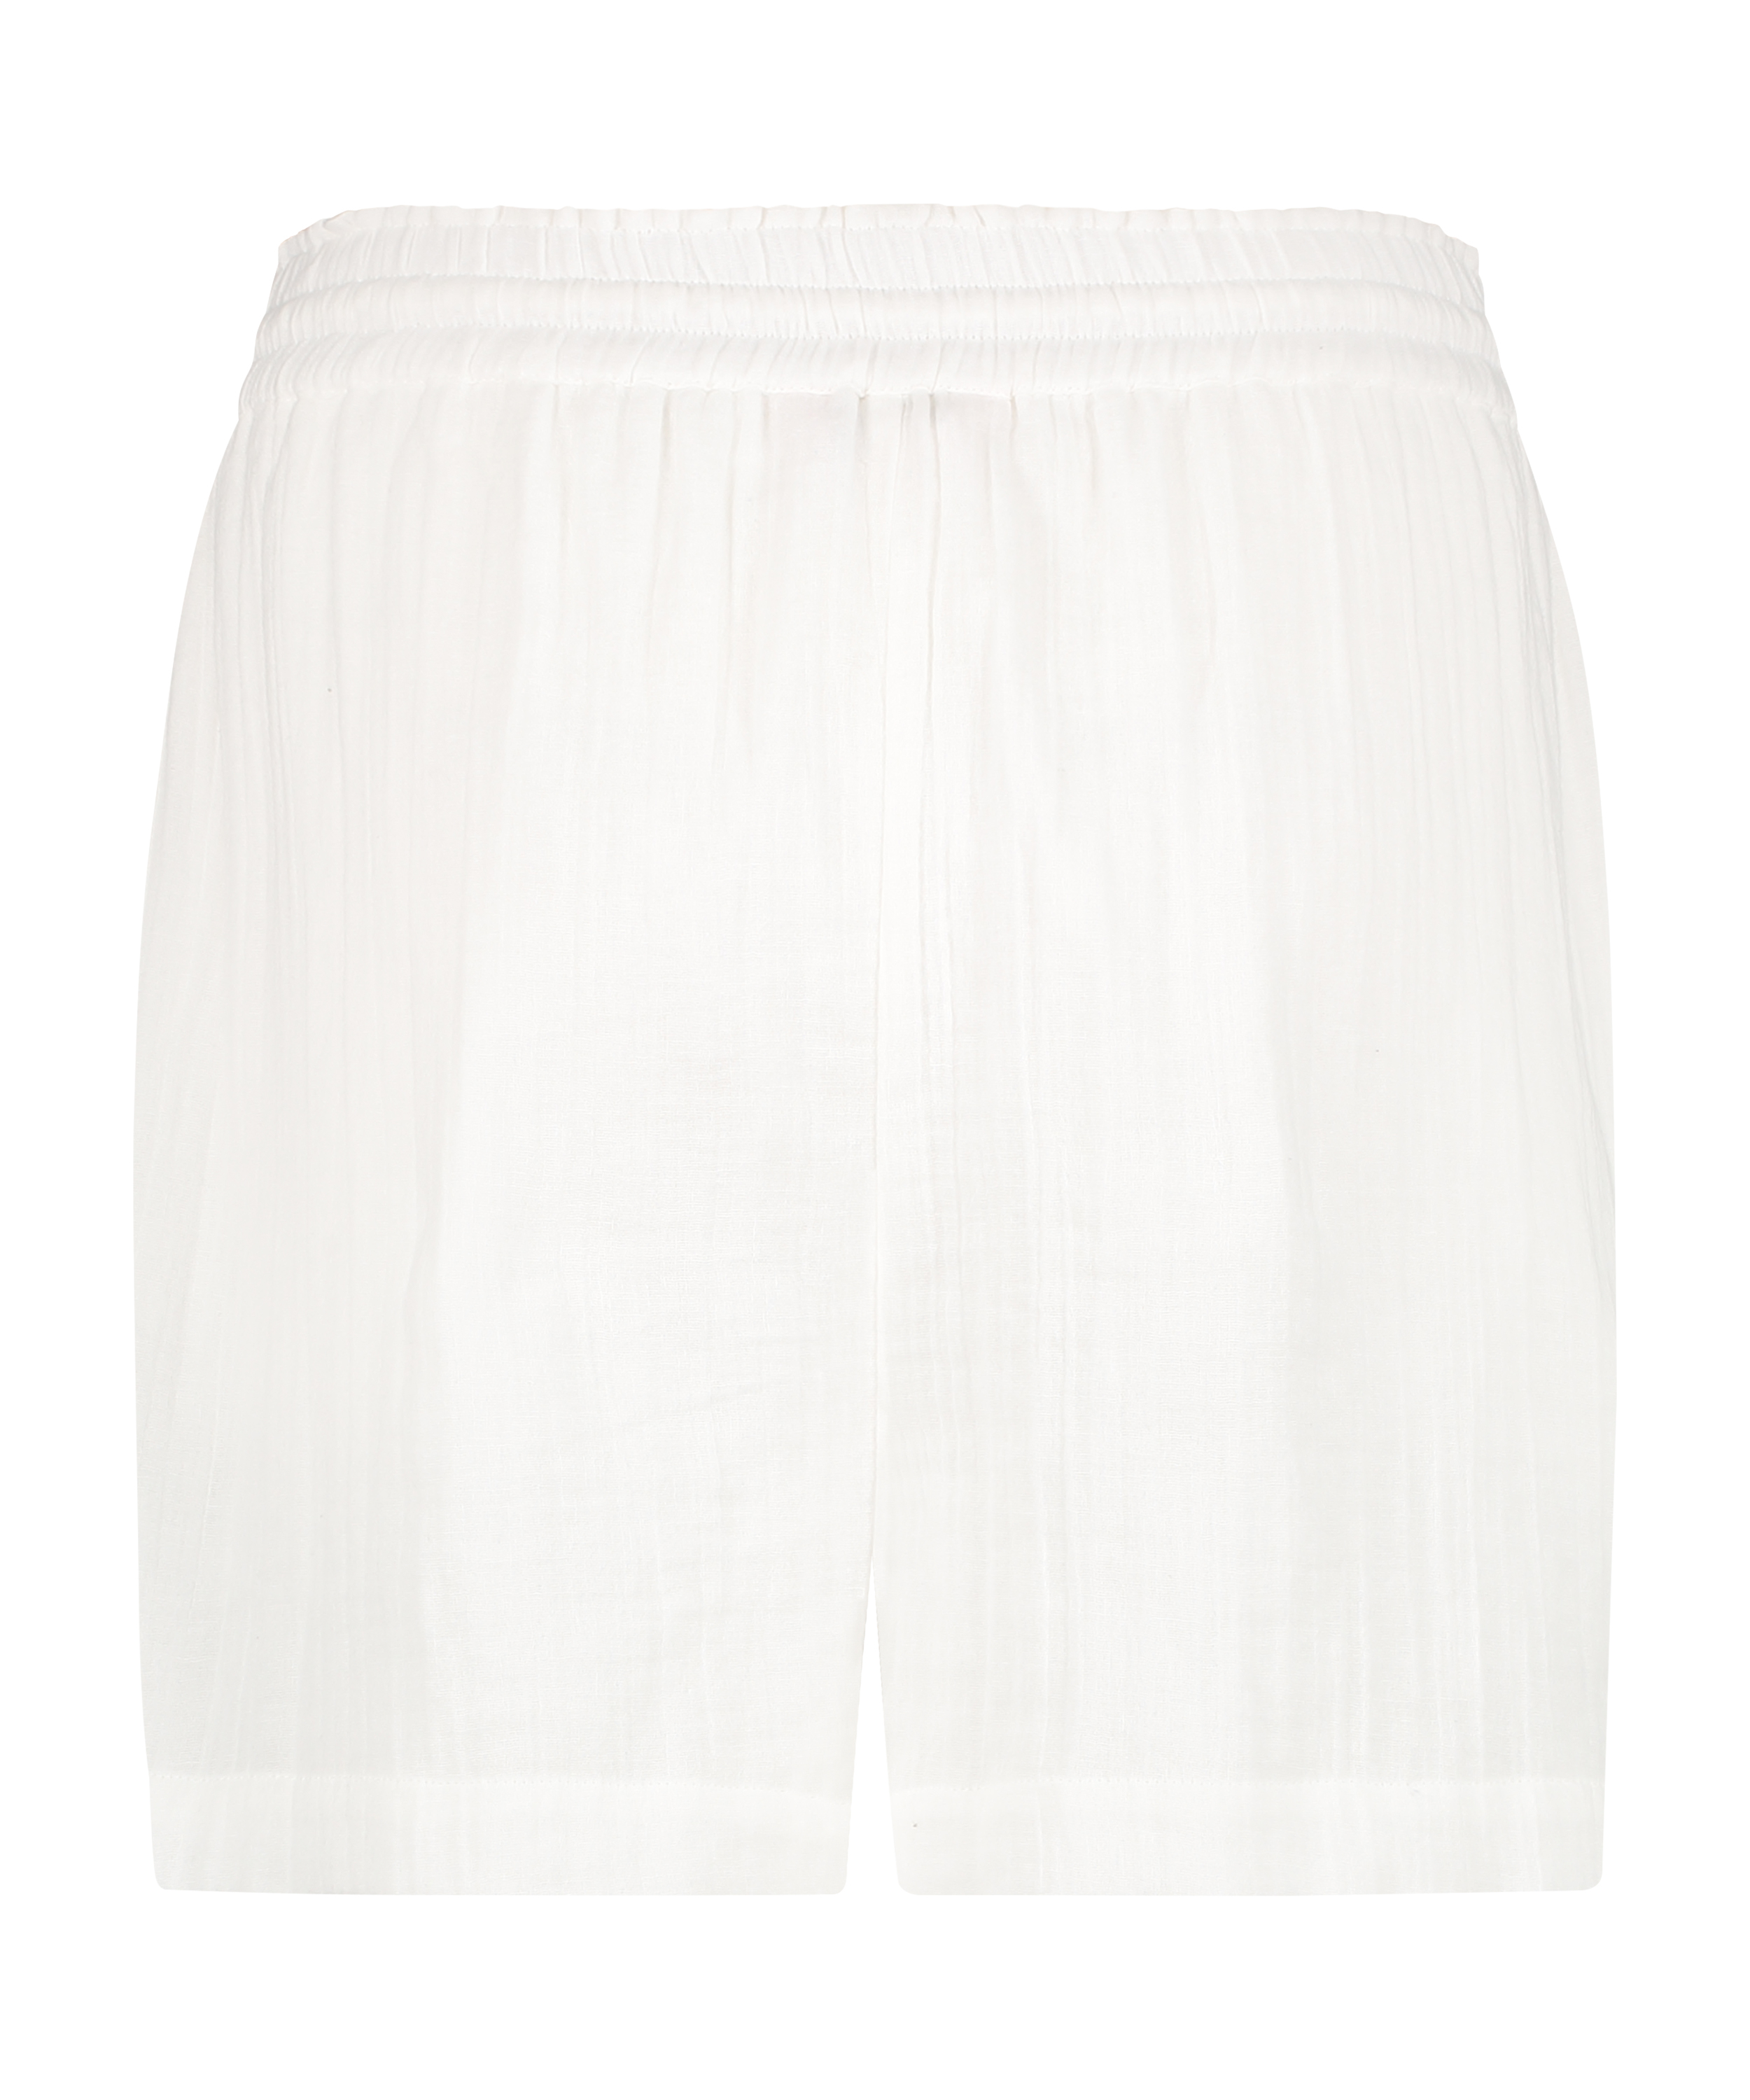 Juna shorts, White, main